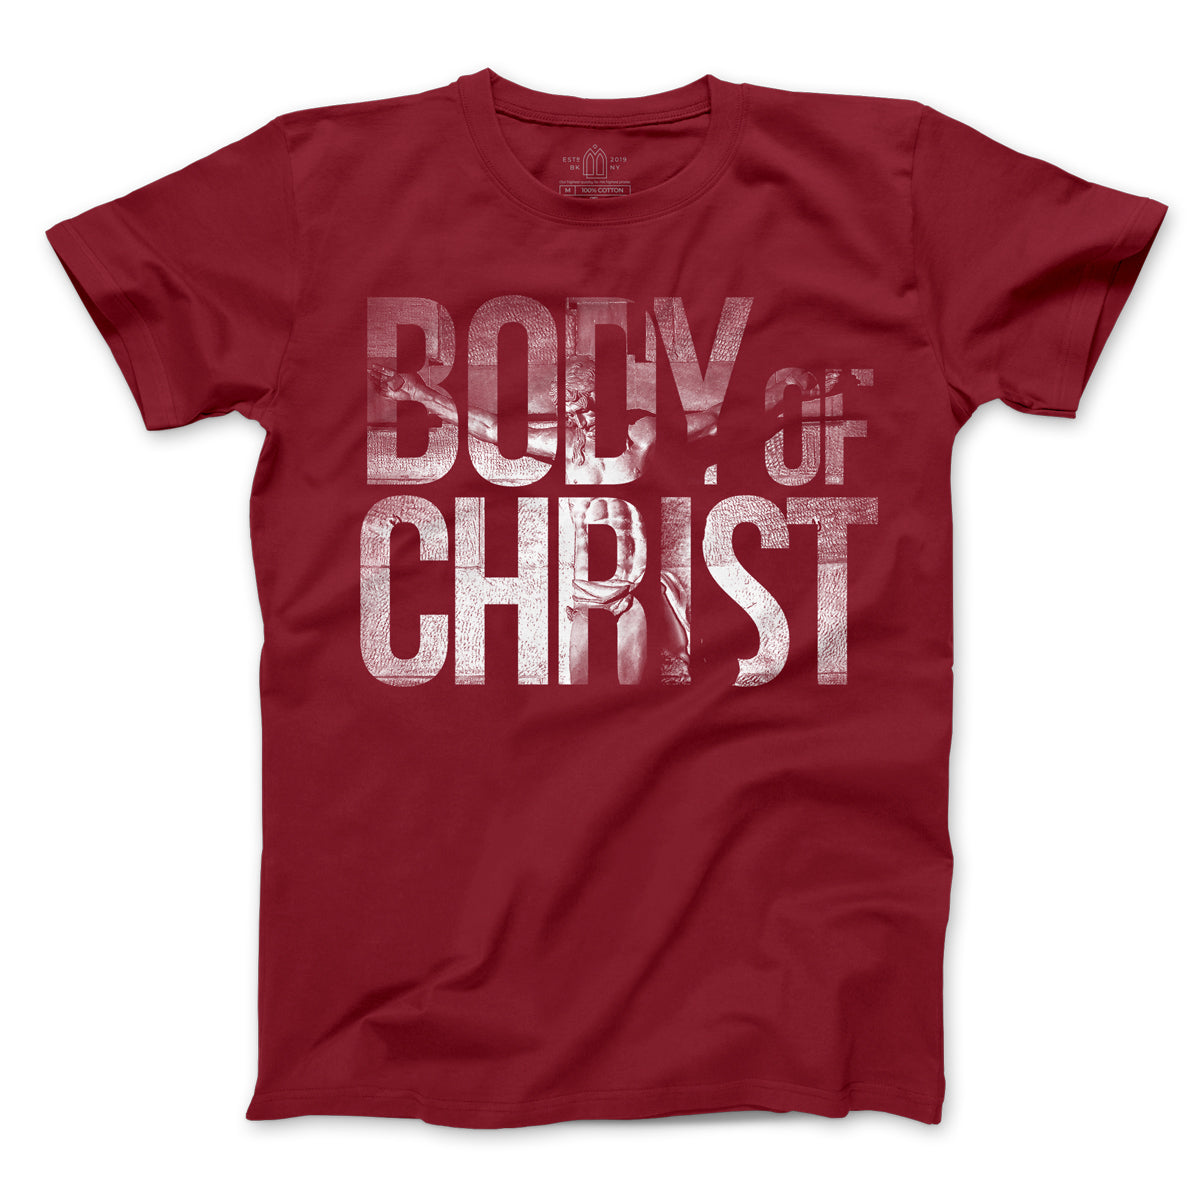 Body of Christ Unisex